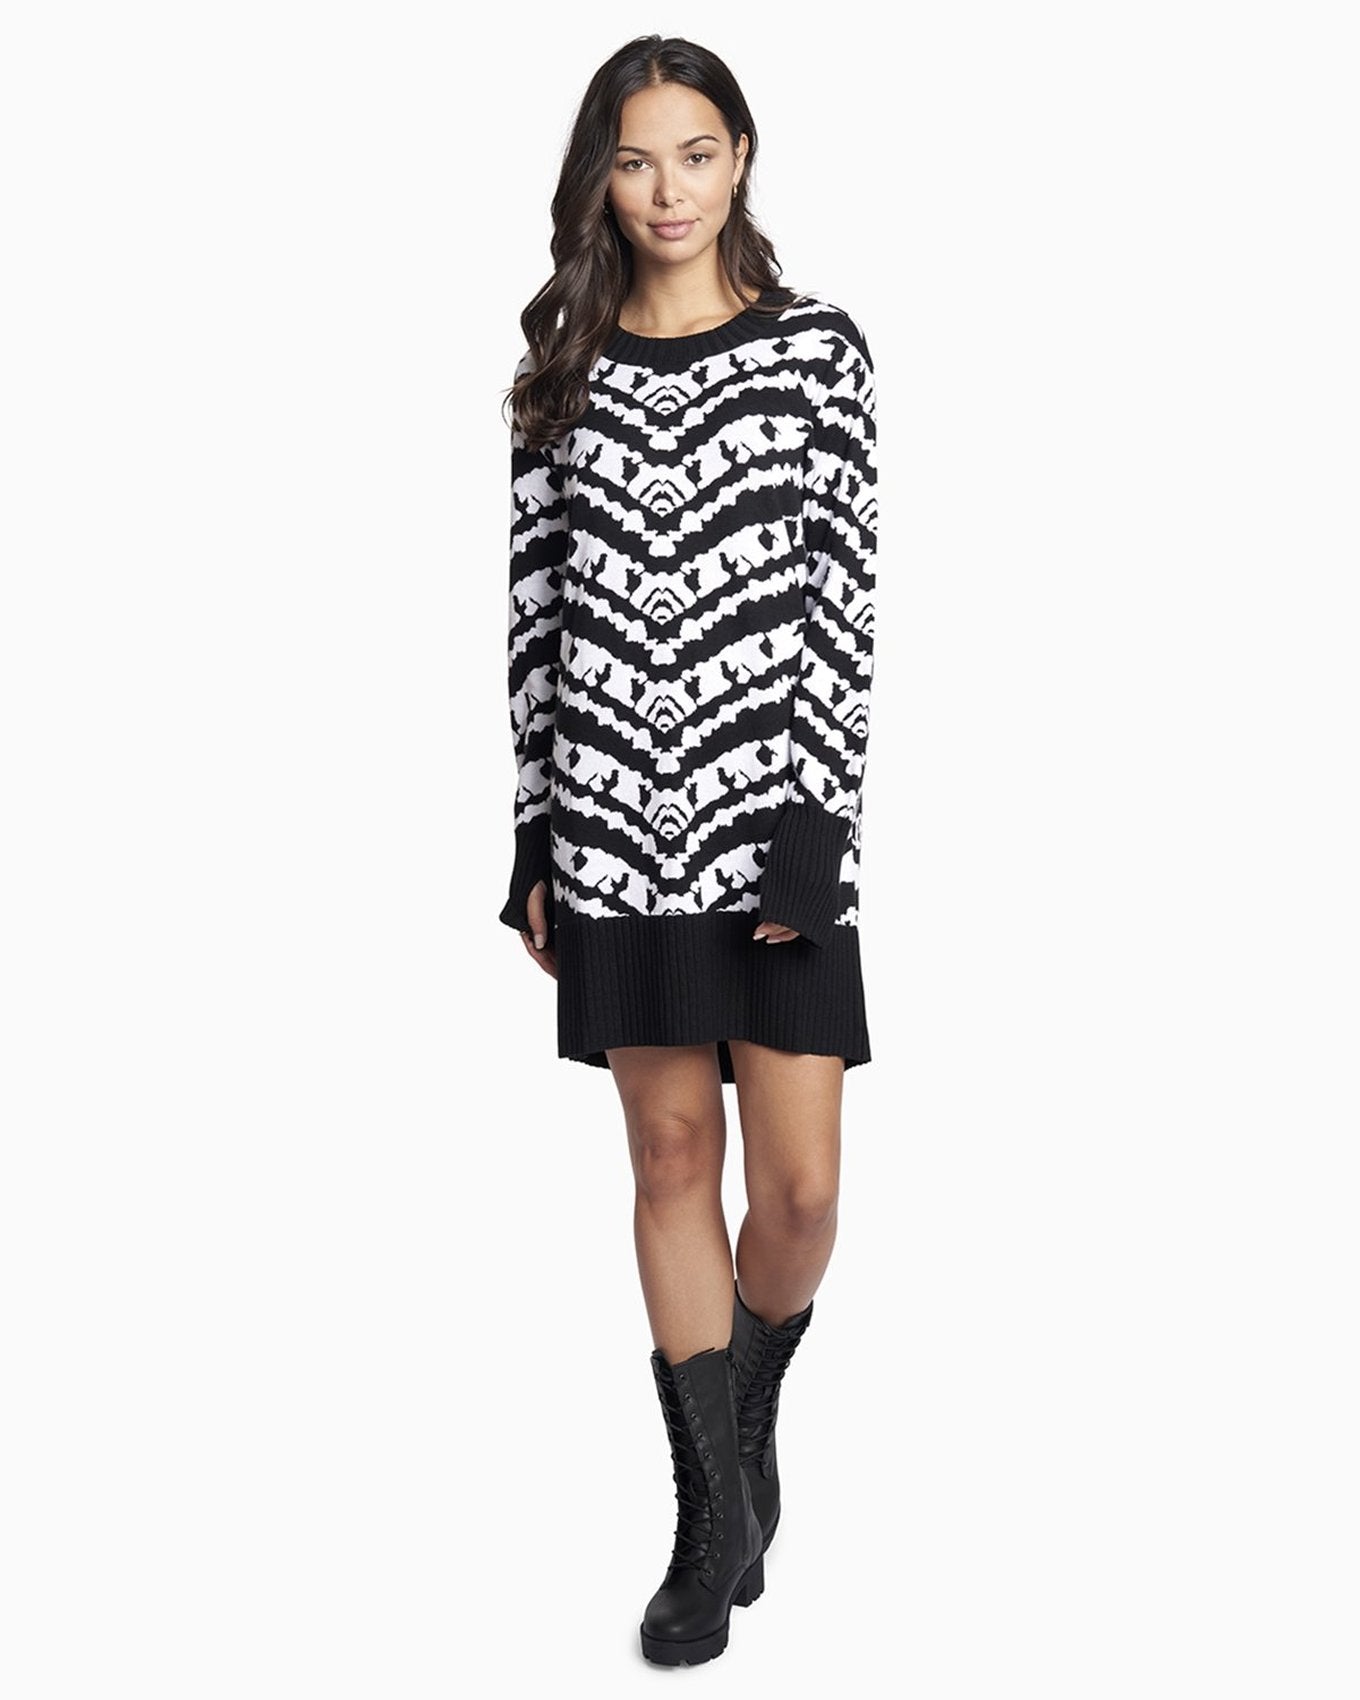 YesAnd Organic Knit Sweater Dress Knit Sweater Dress in color B&W Jacquard C01 and shape sheath